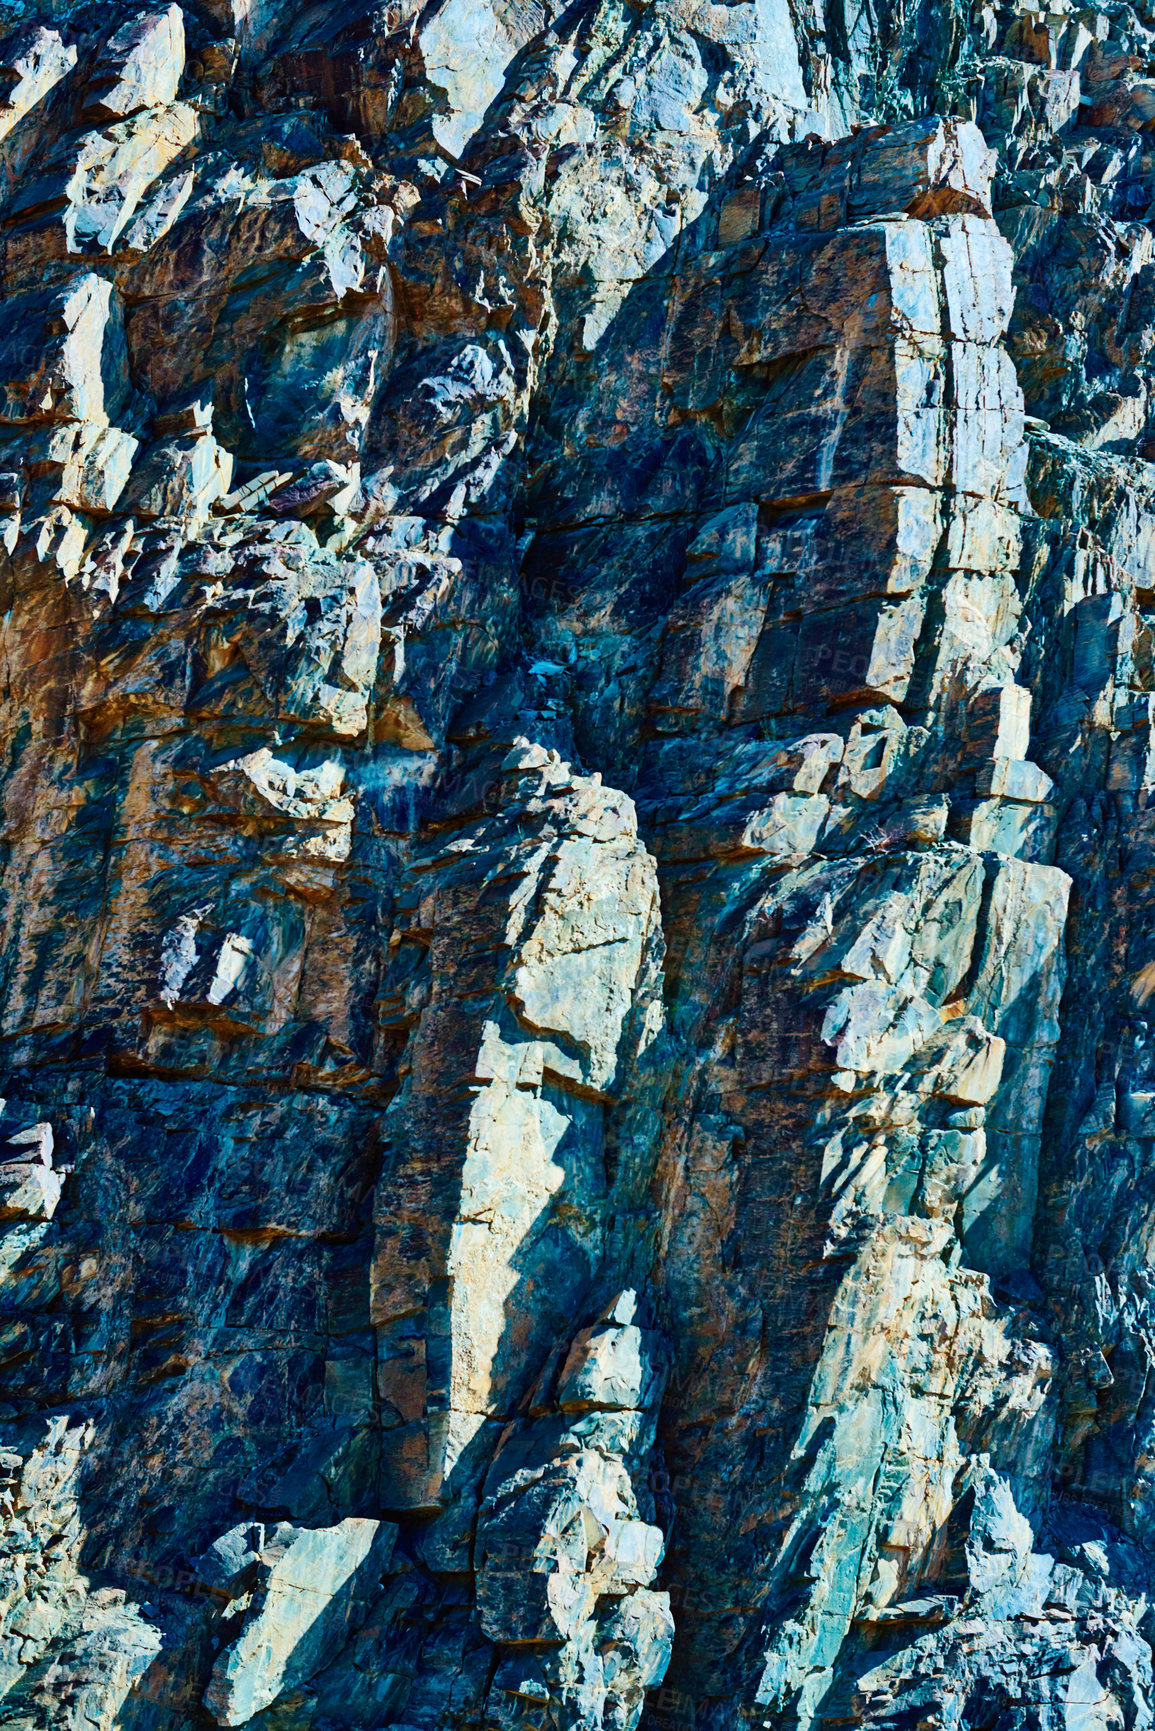 Buy stock photo Closeup shot of rocky terrain